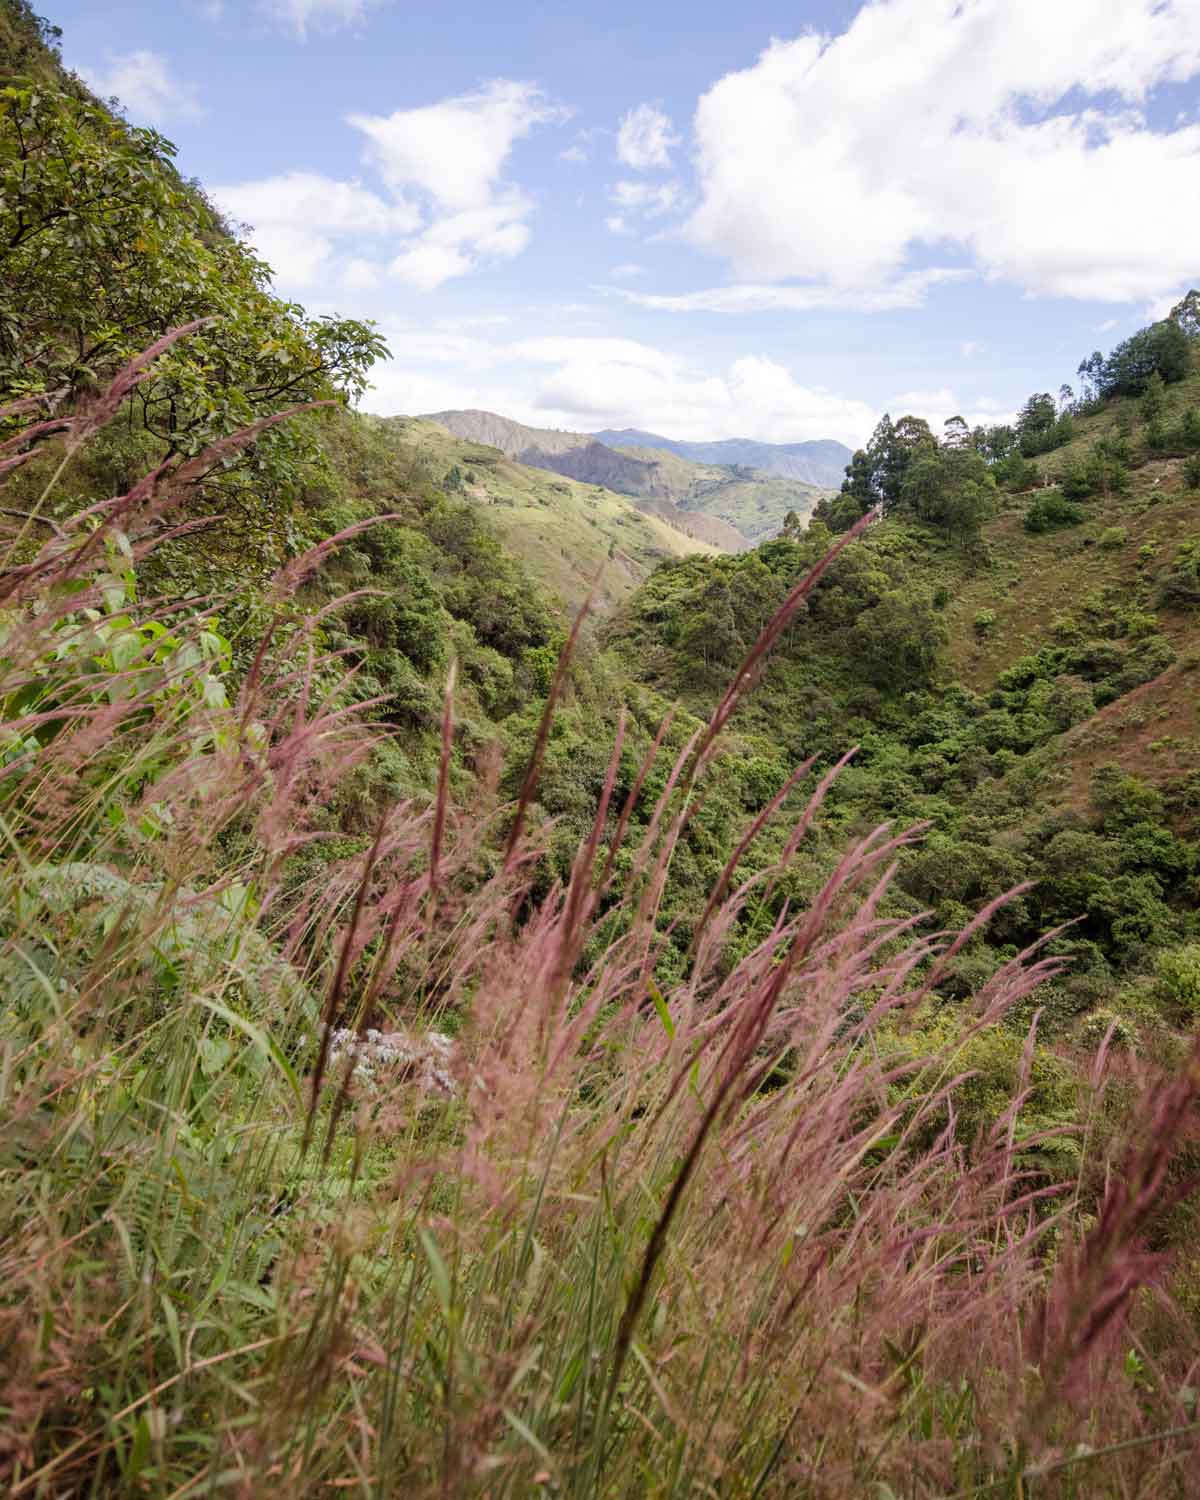 Yaragua paints the Vilcabamba countryside a pinkish burgundy hue.